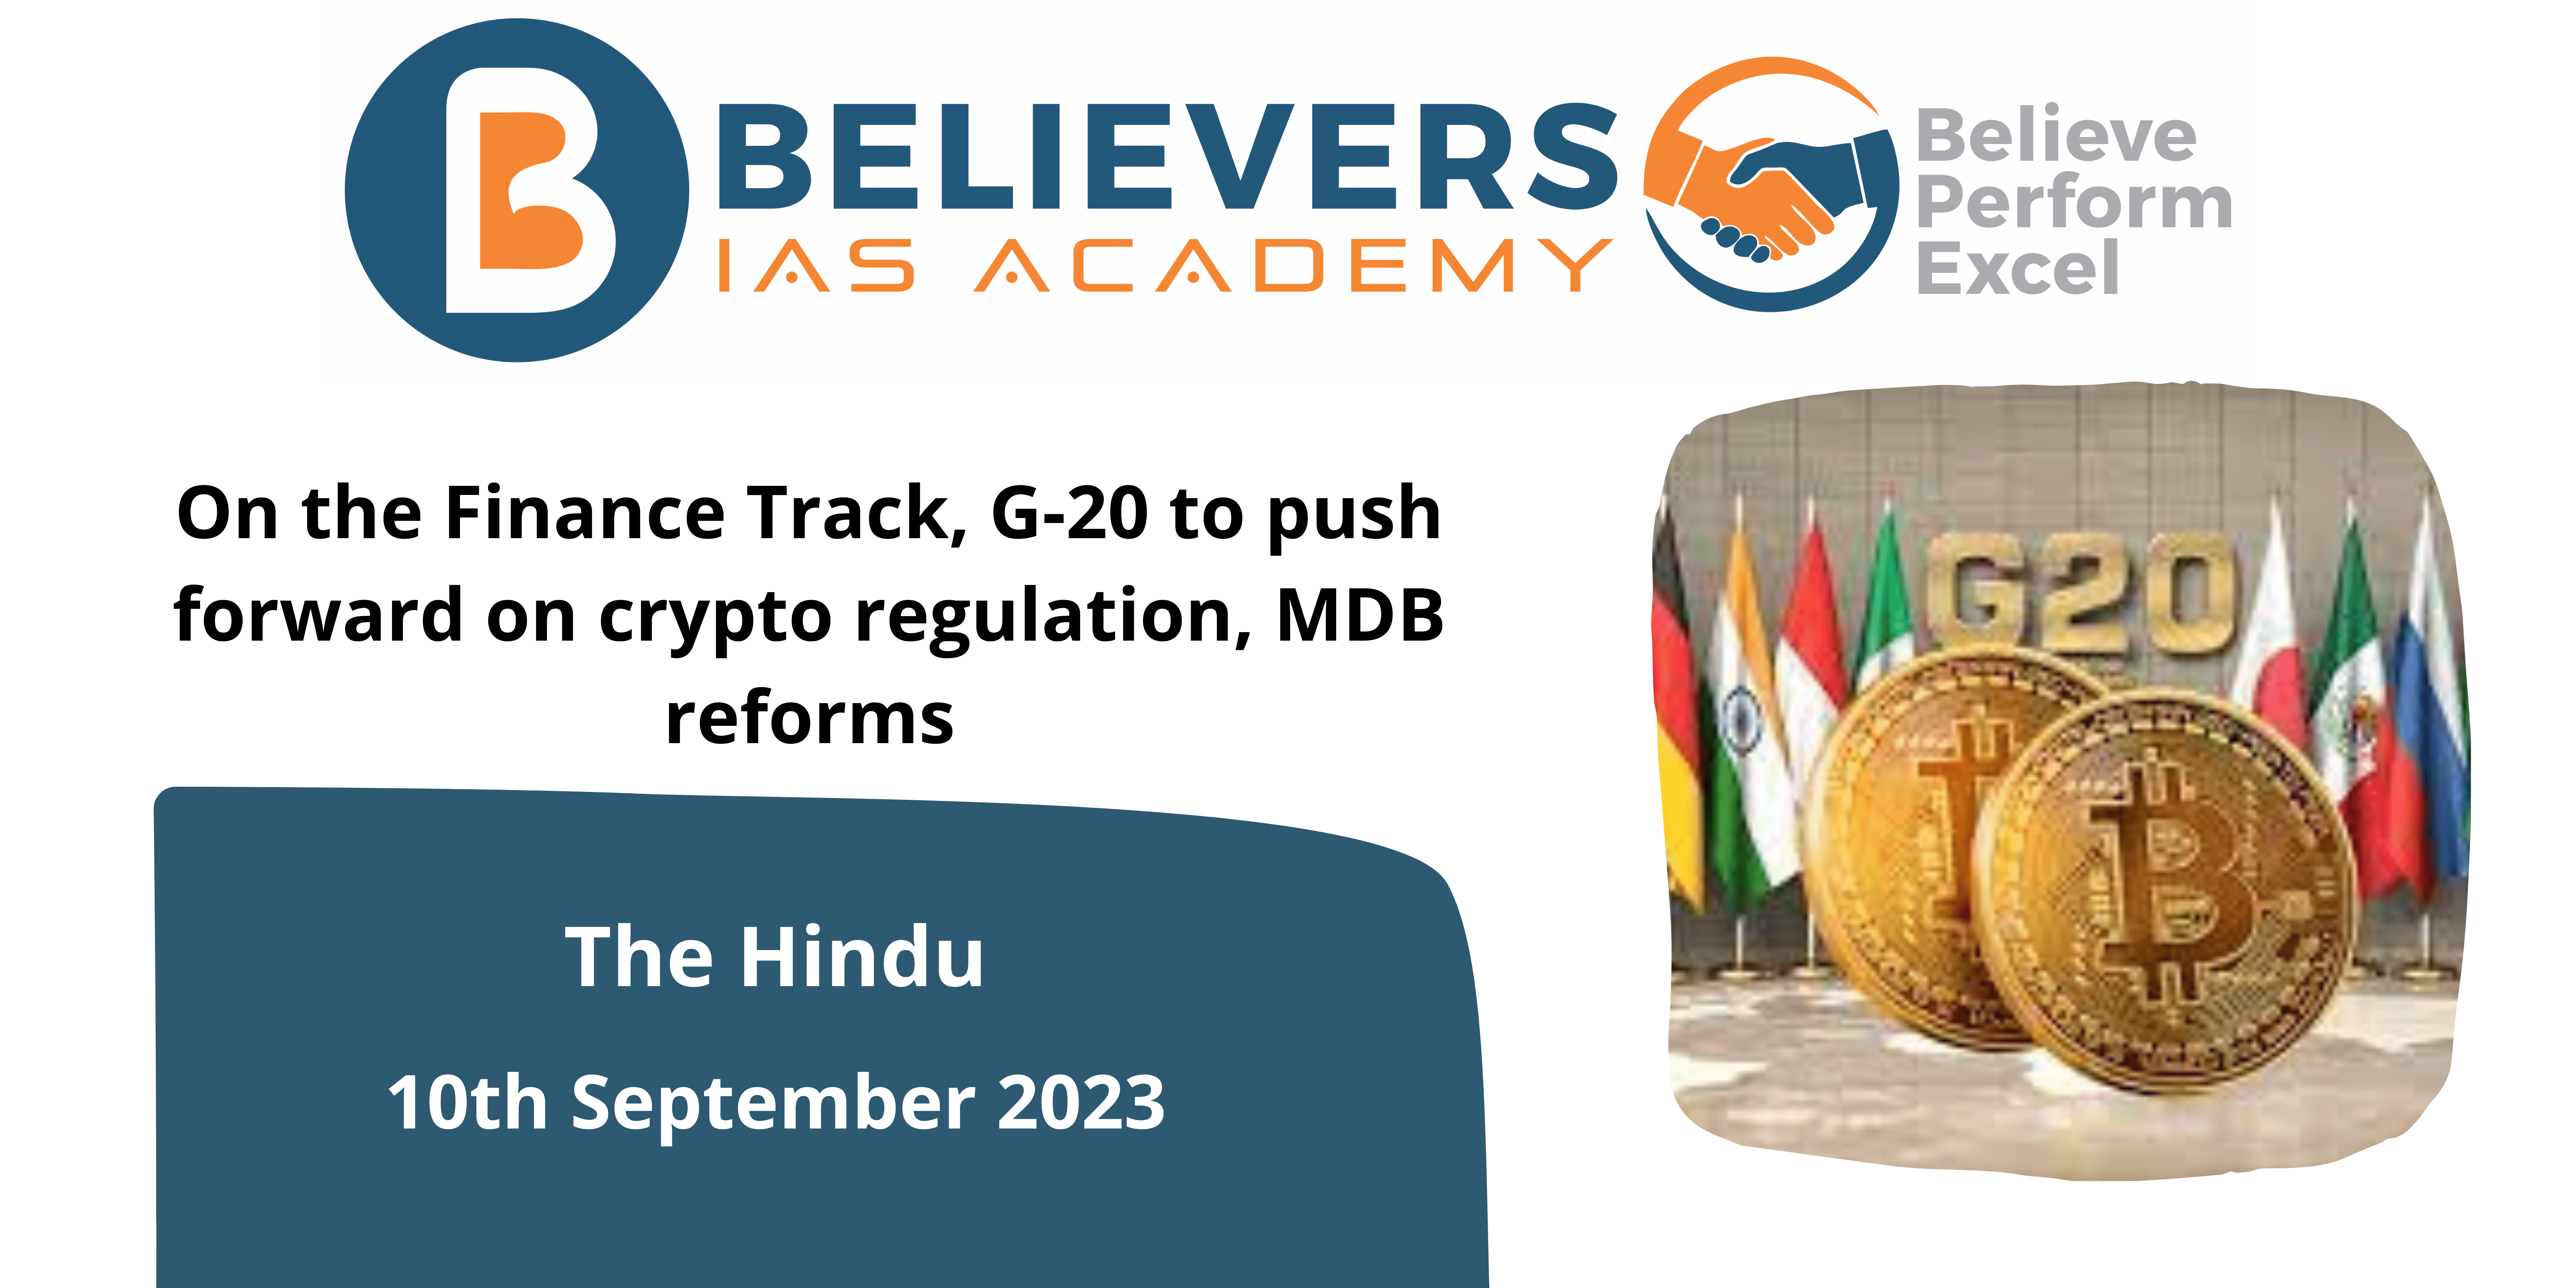 On the Finance Track, G-20 to push forward on crypto regulation, MDB reforms